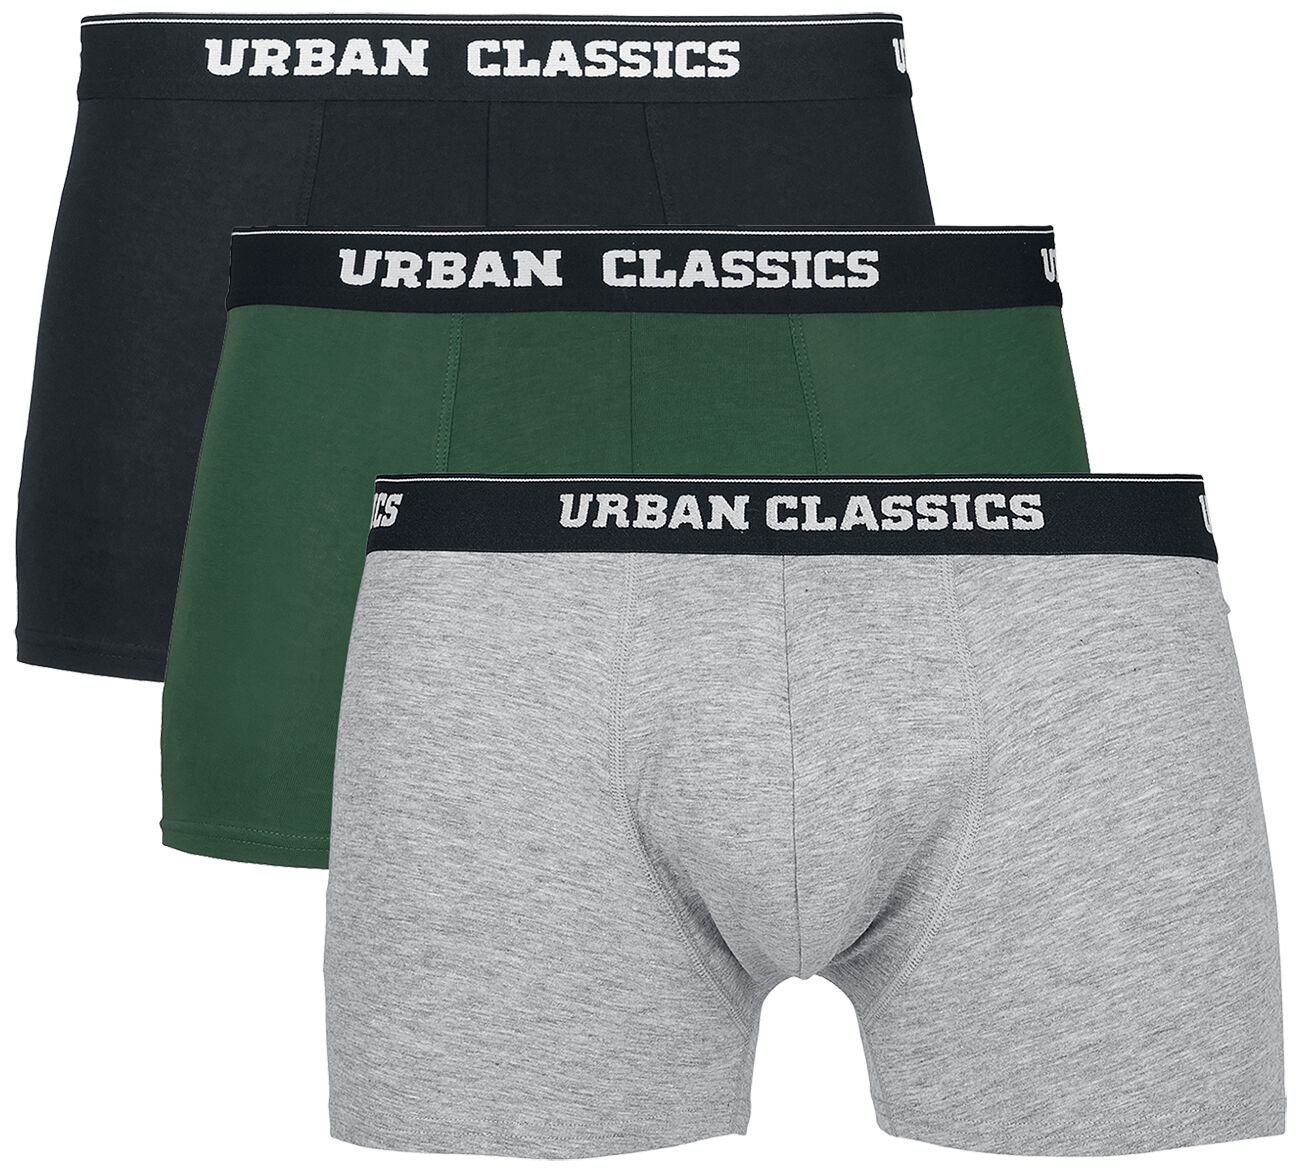 Urban Classics Boxershorts 3 Pack Boxers Set black grey green